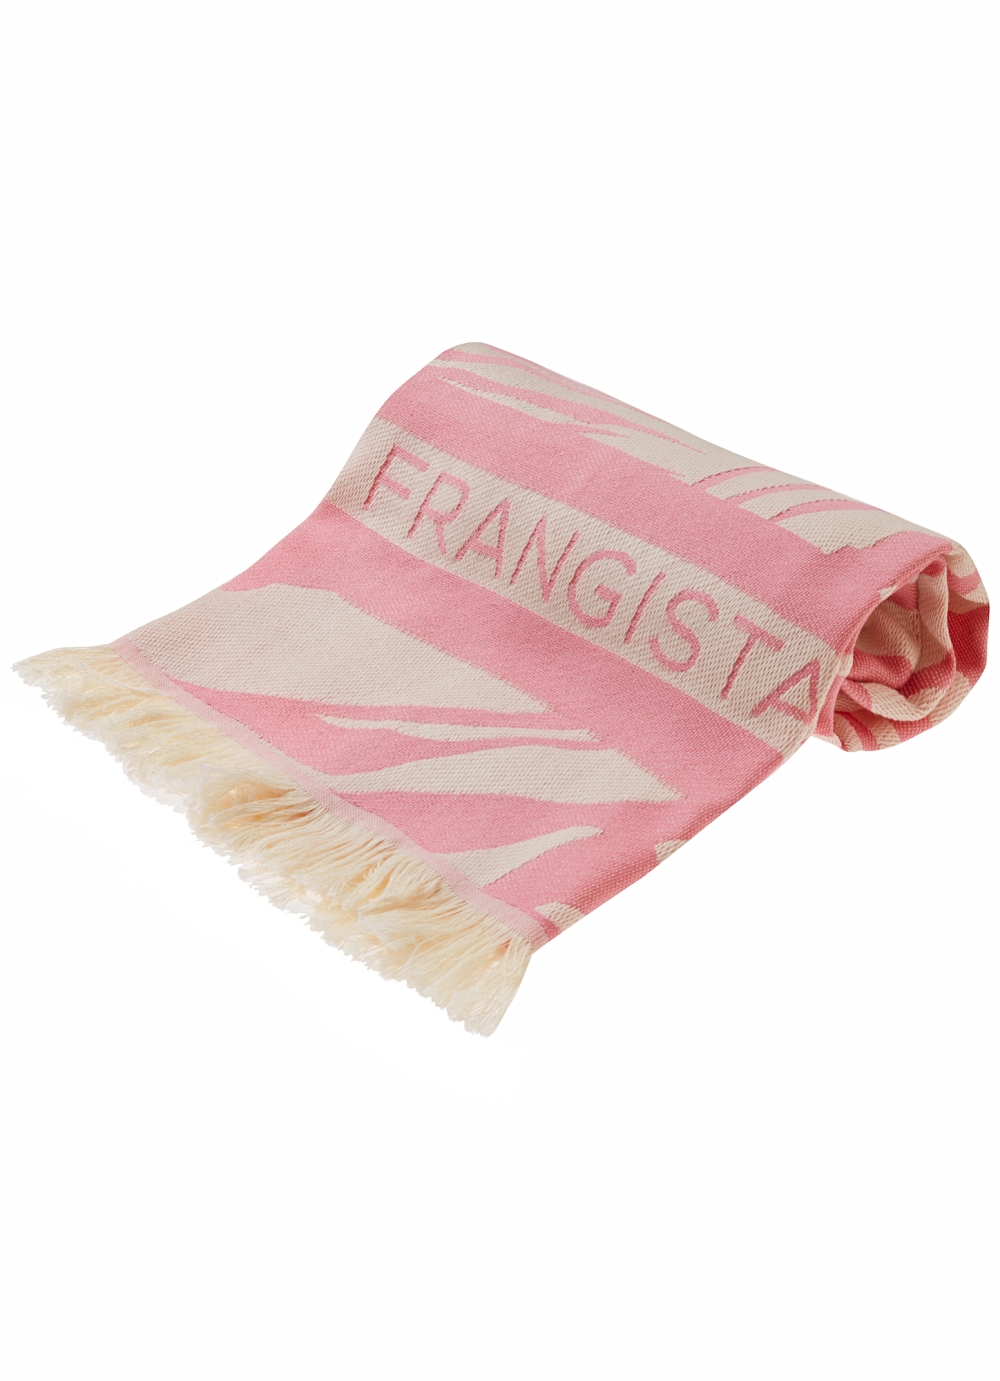 FRANGISTA Towel | Beach Pink STEFANIA Zebra